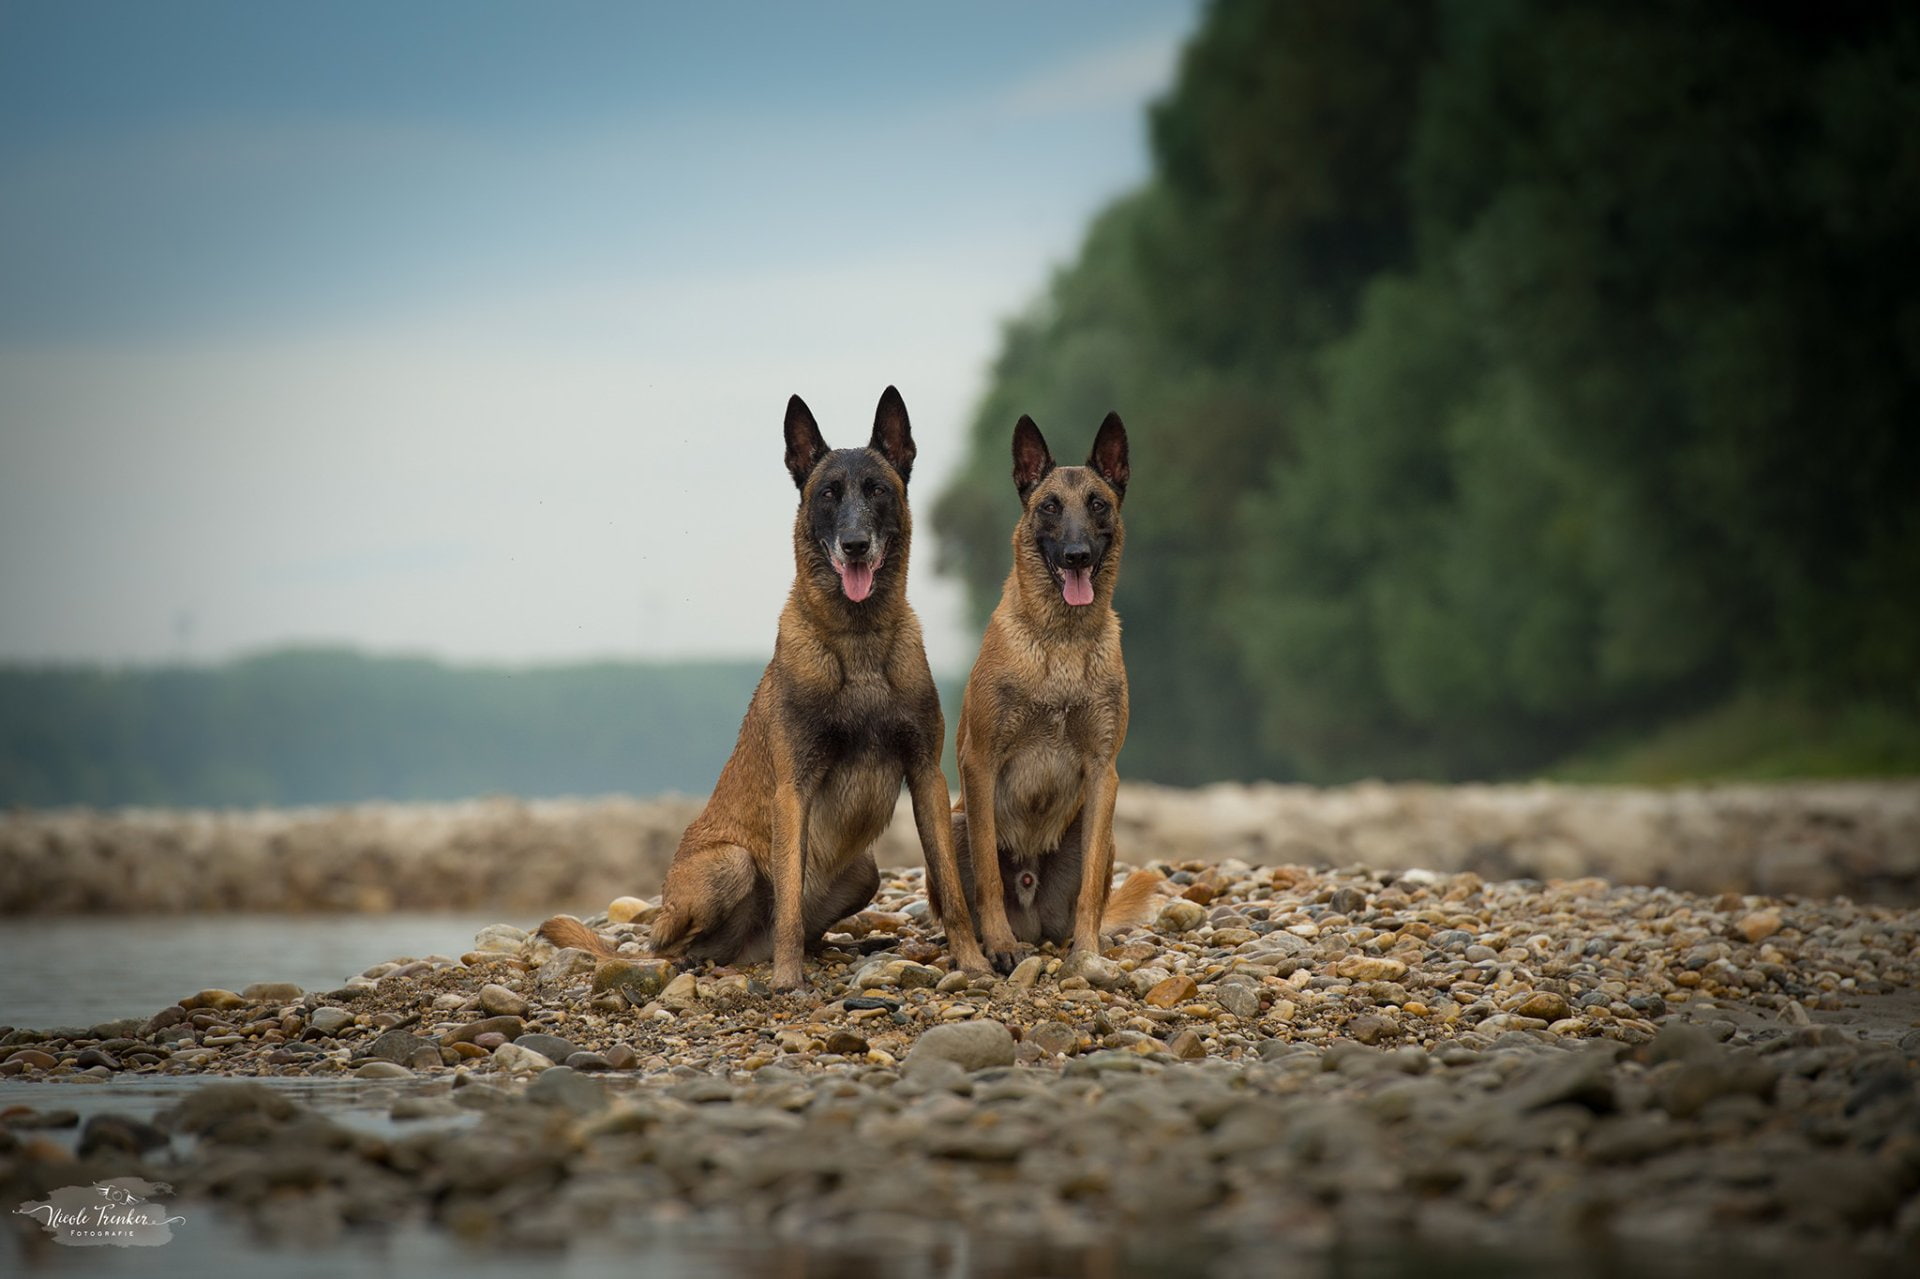 Dogs, Belgian Malinois